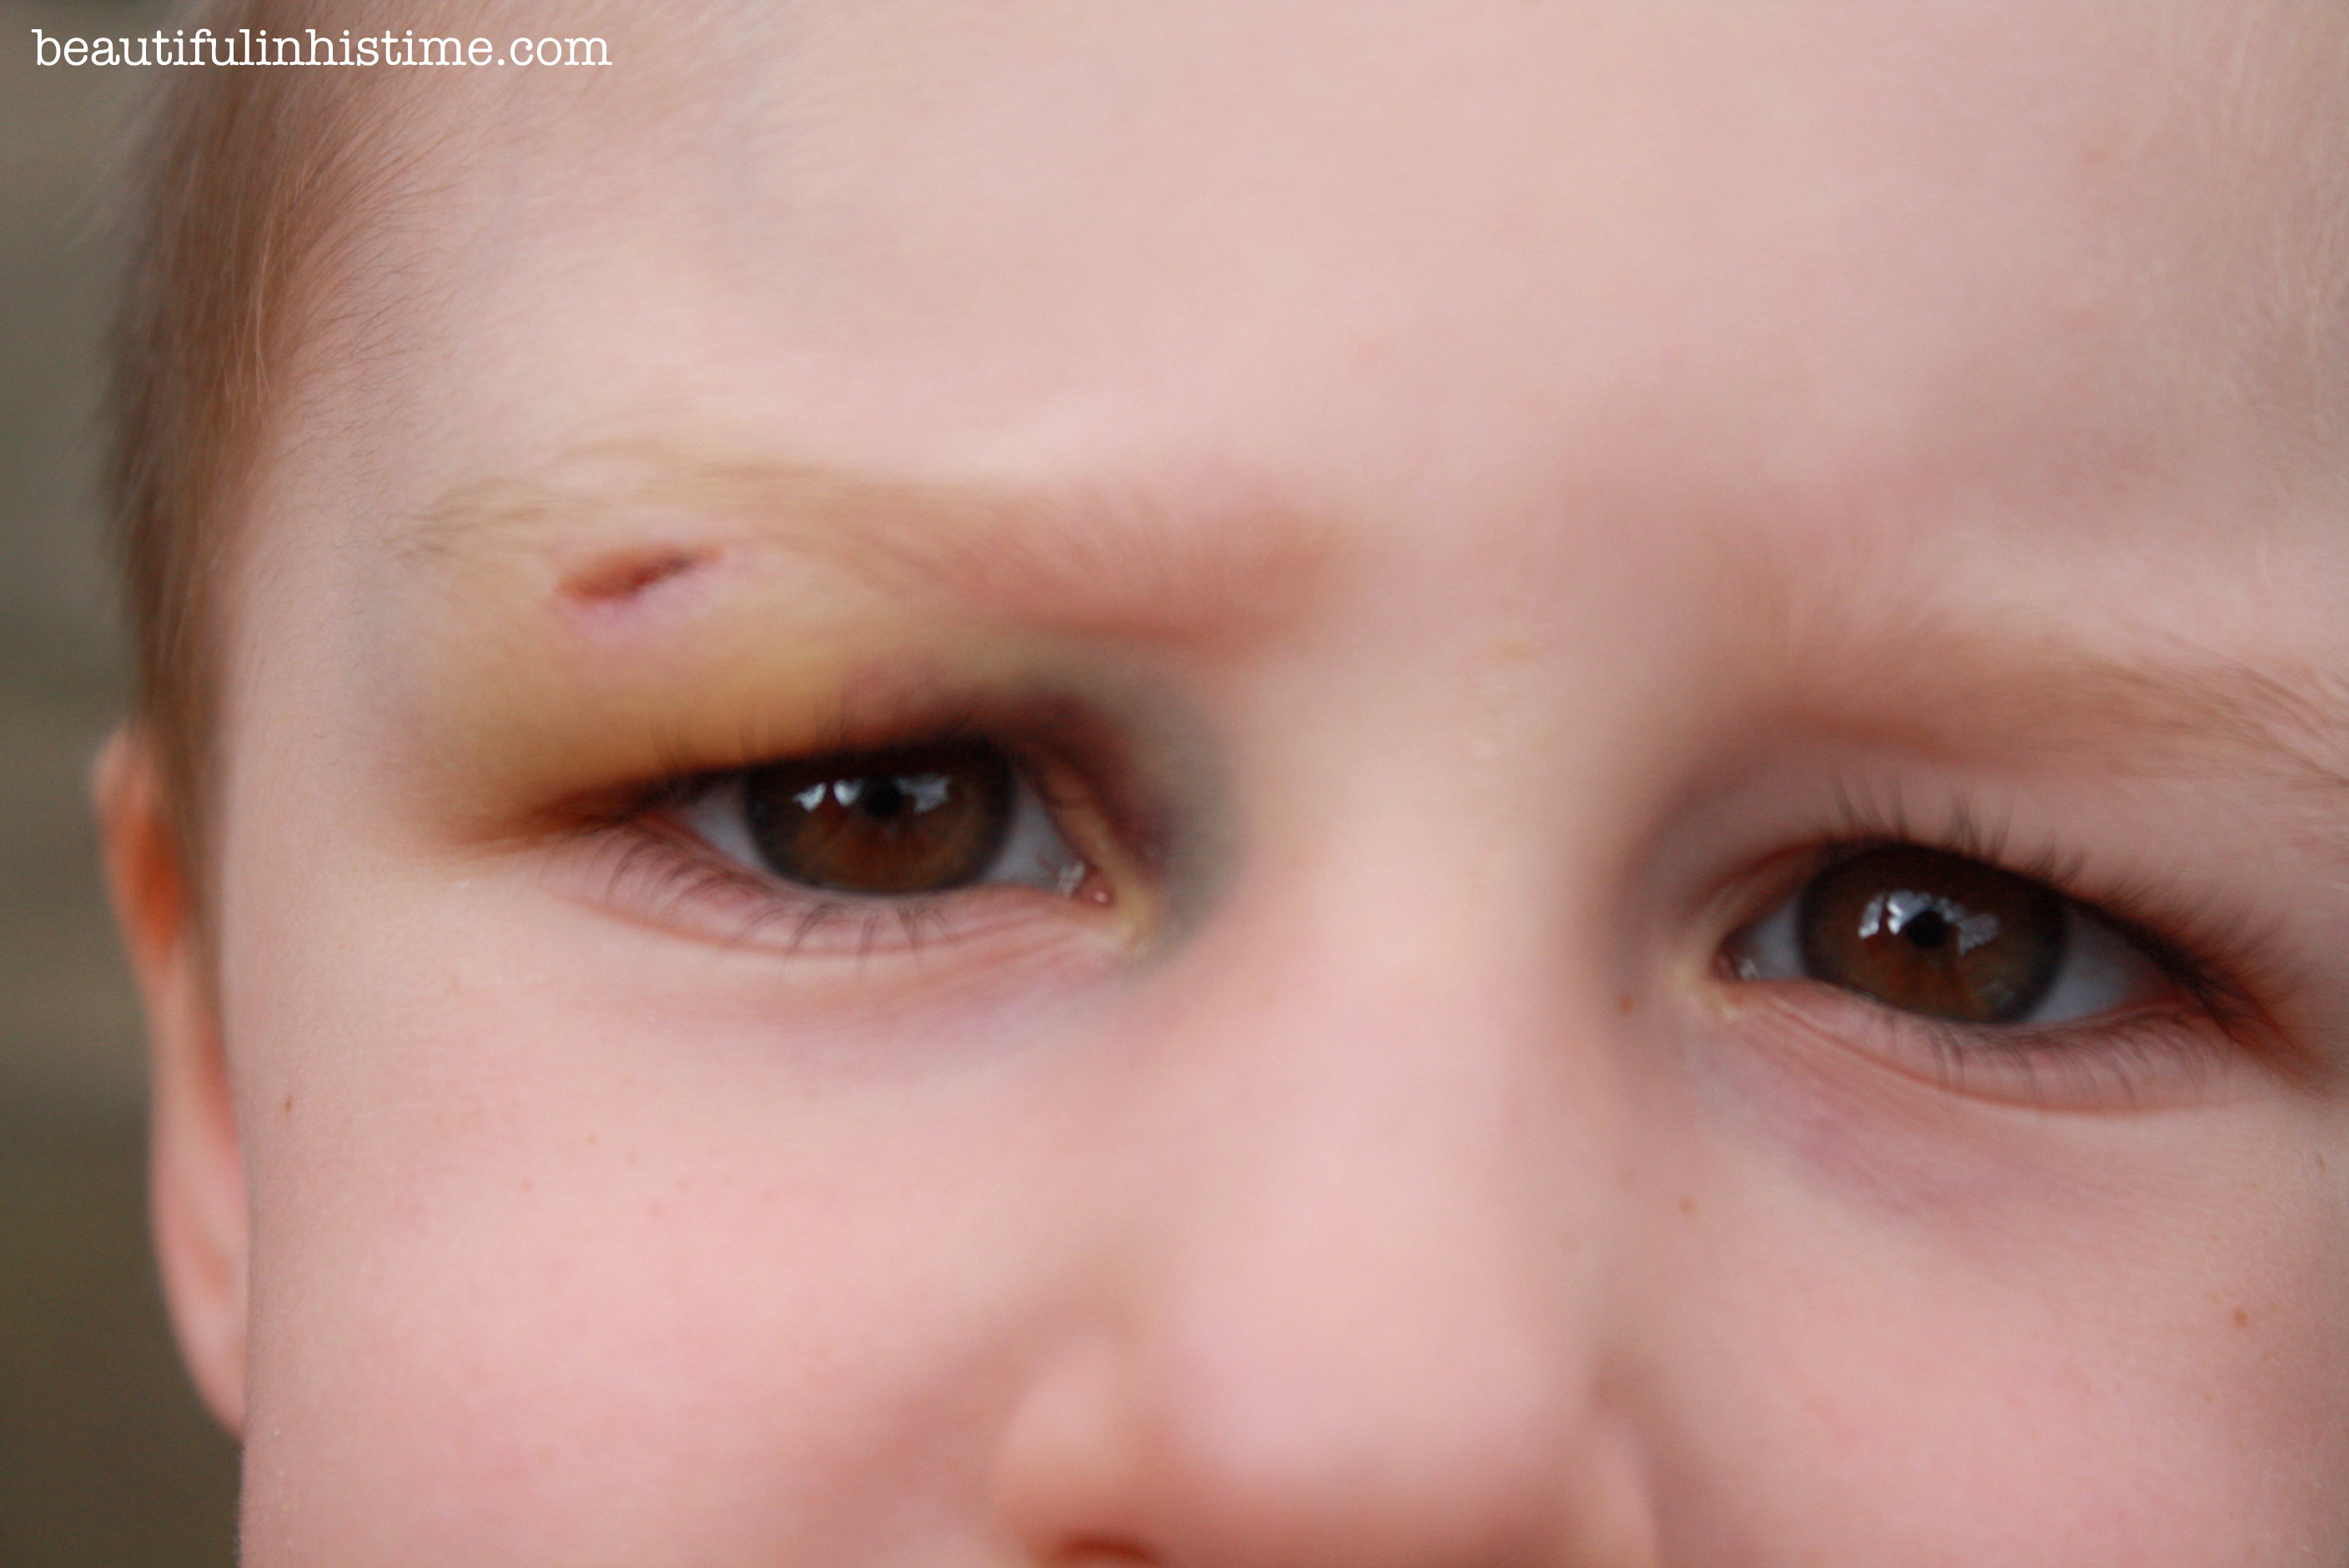 healing black eye Beauty in the Mess Edition 07.09.13 @beautifulinhistime.com